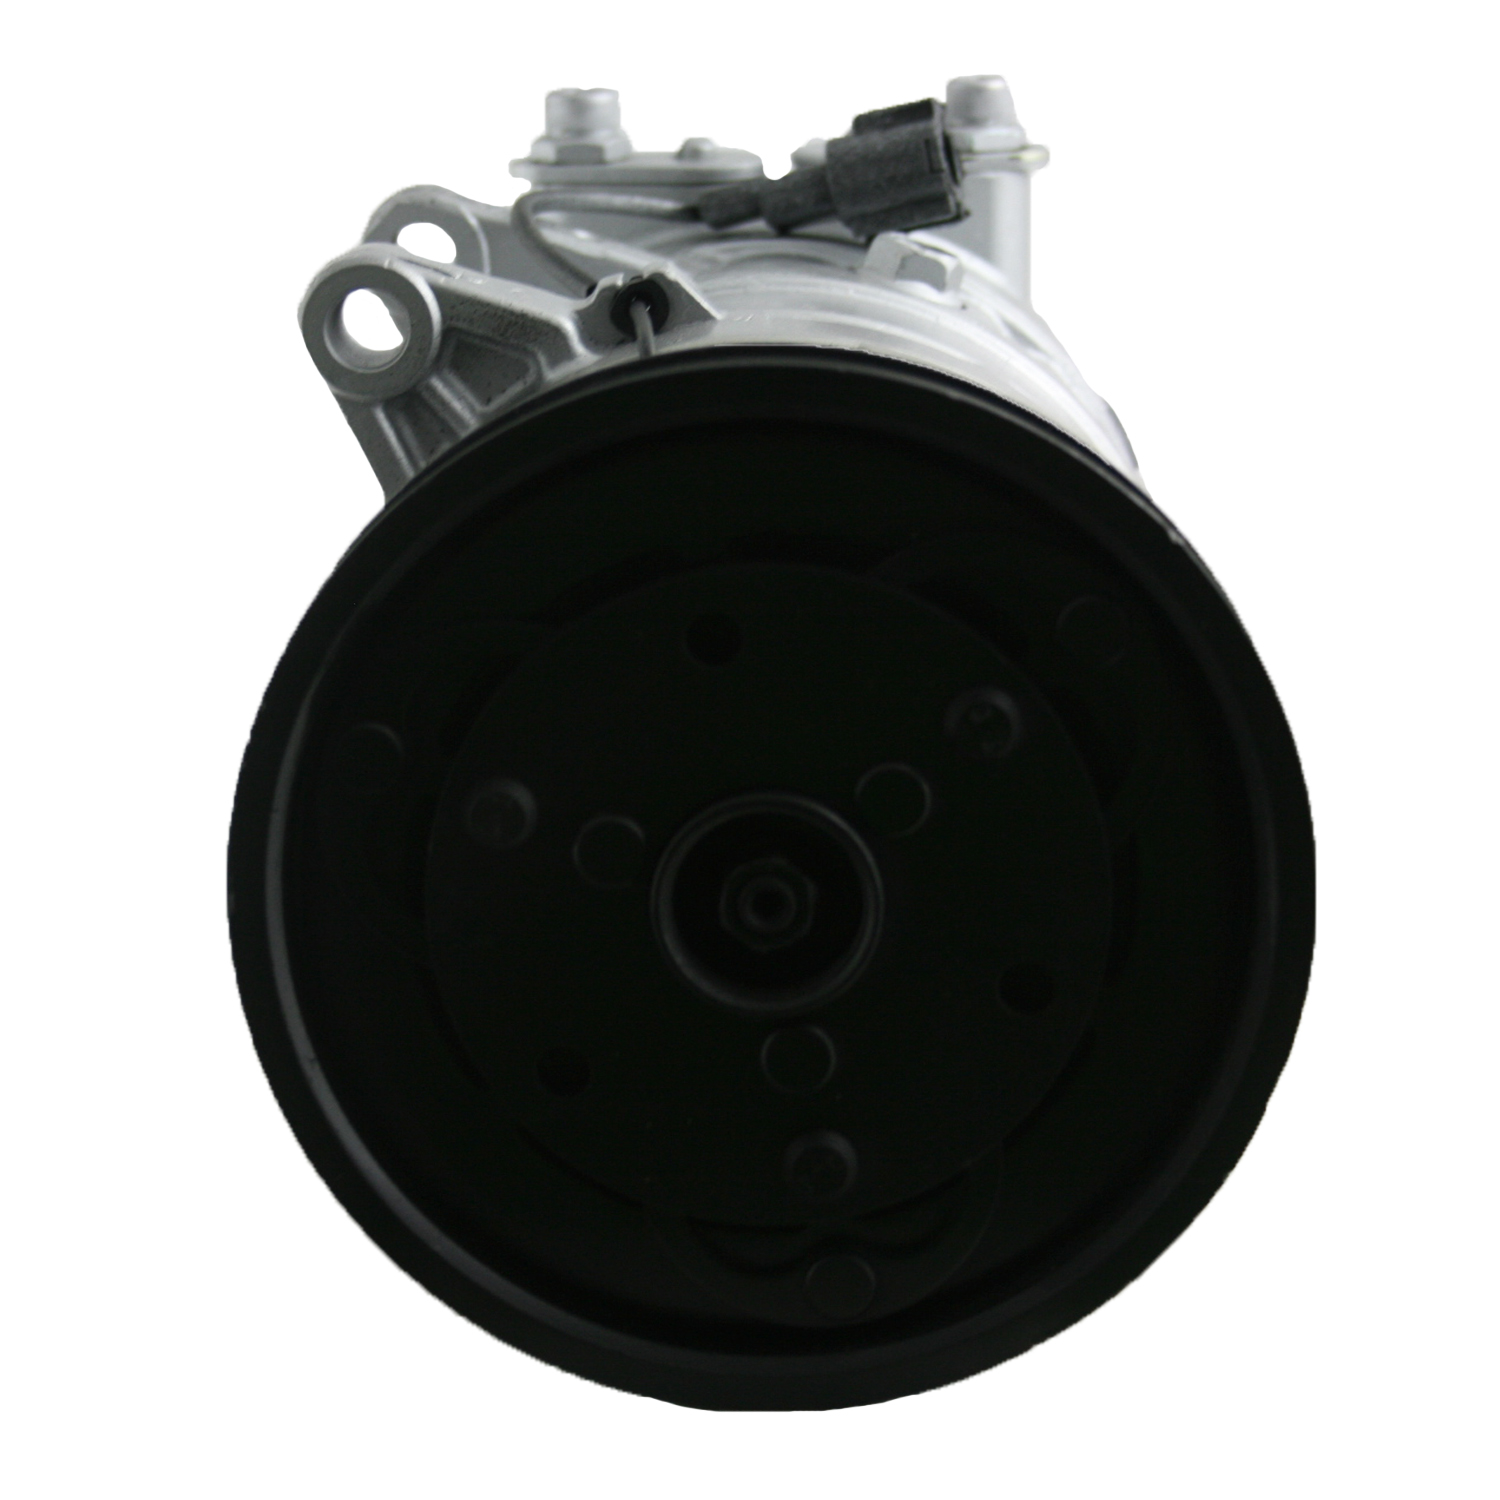 TCW Compressor 12450.402 Remanufactured Product Image field_60b6a13a6e67c